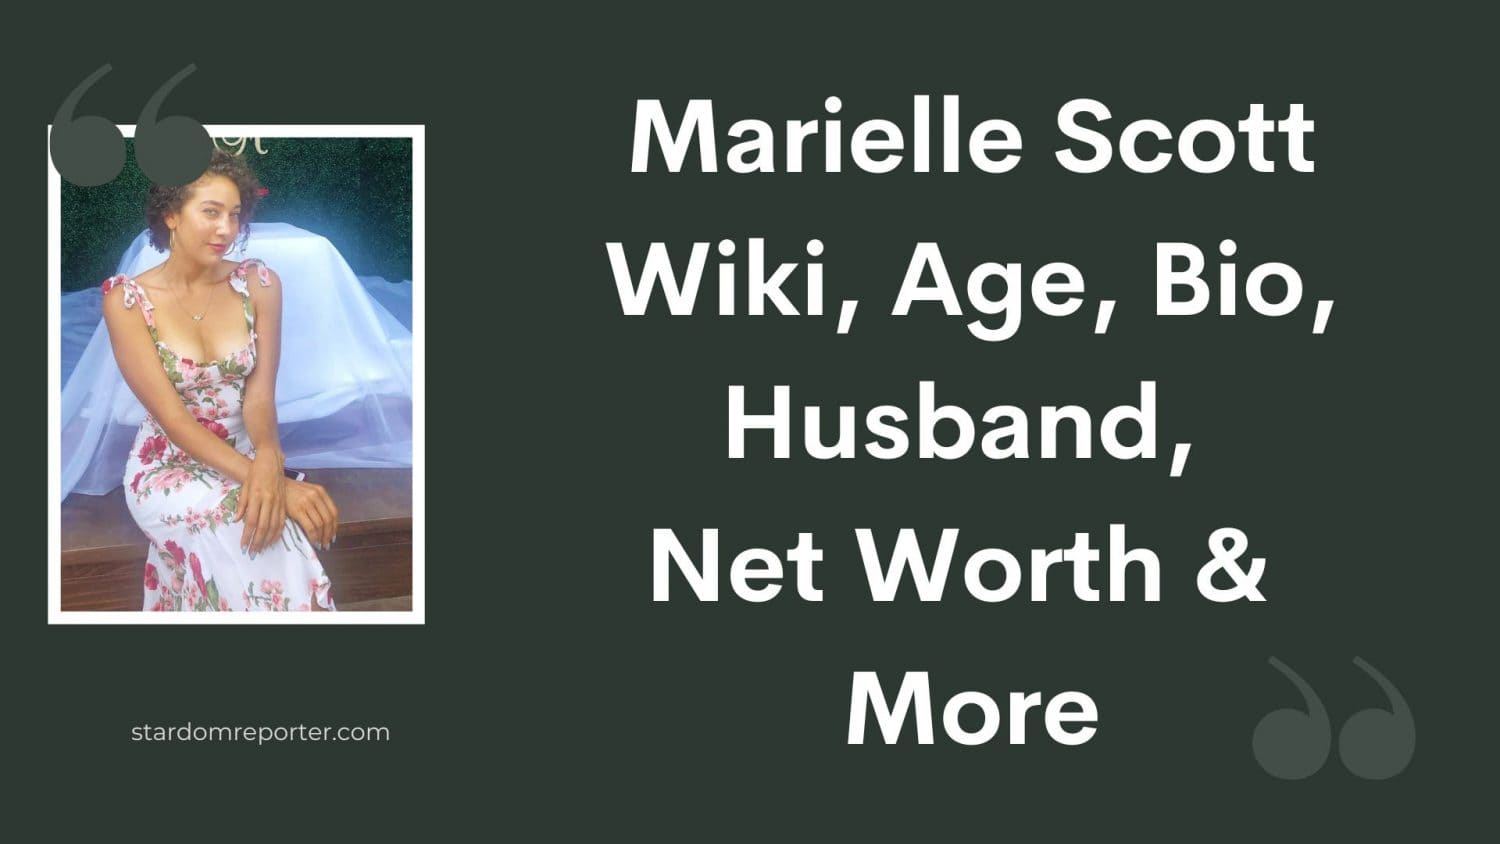 Marielle Scott Wiki, Age, Bio, Husband, Net Worth & More - 25